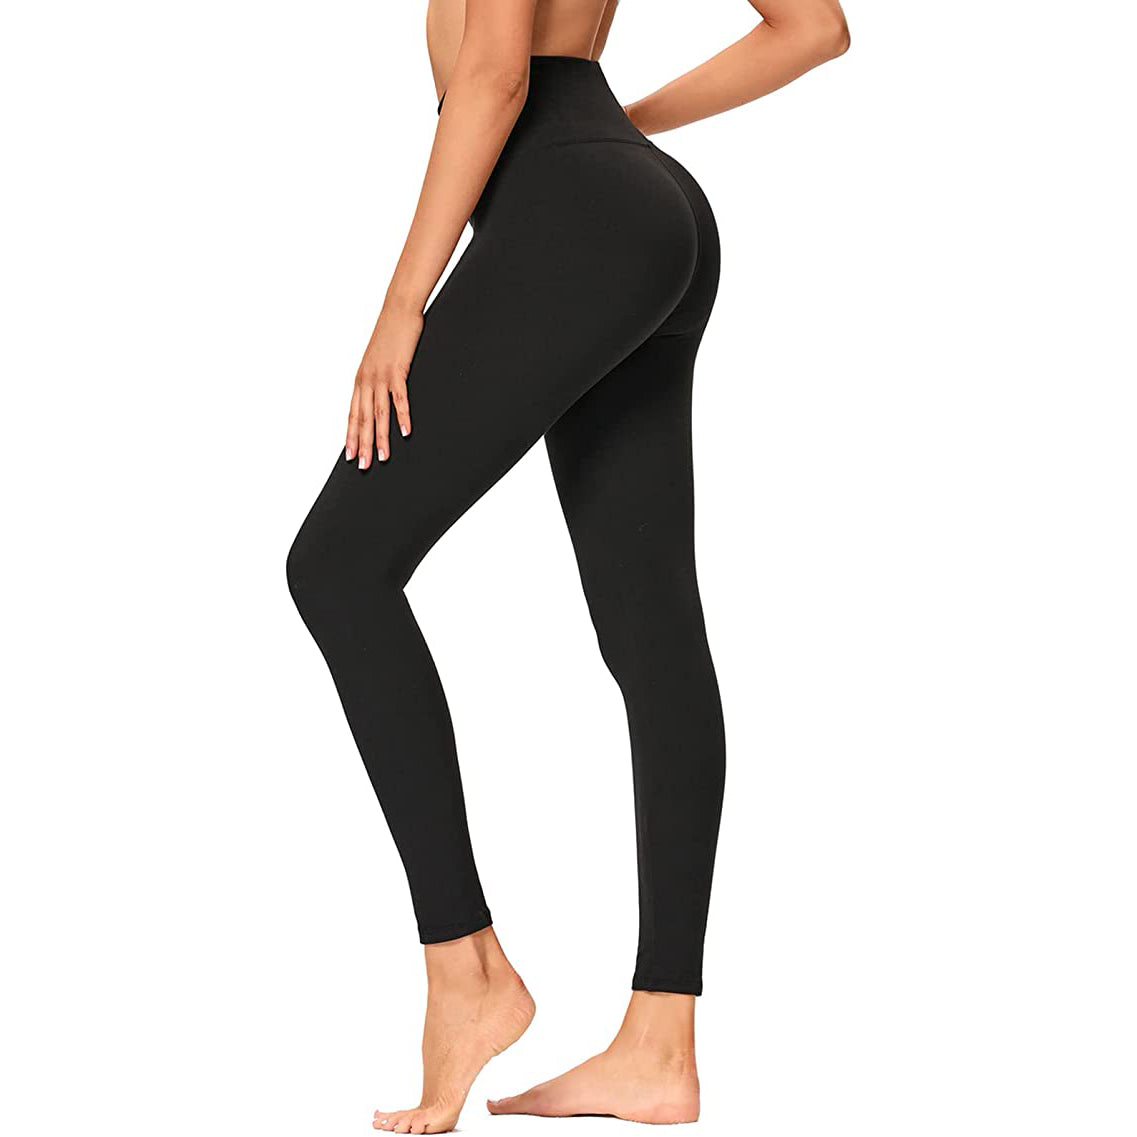 Purchase Wholesale high waist leggings. Free Returns & Net 60